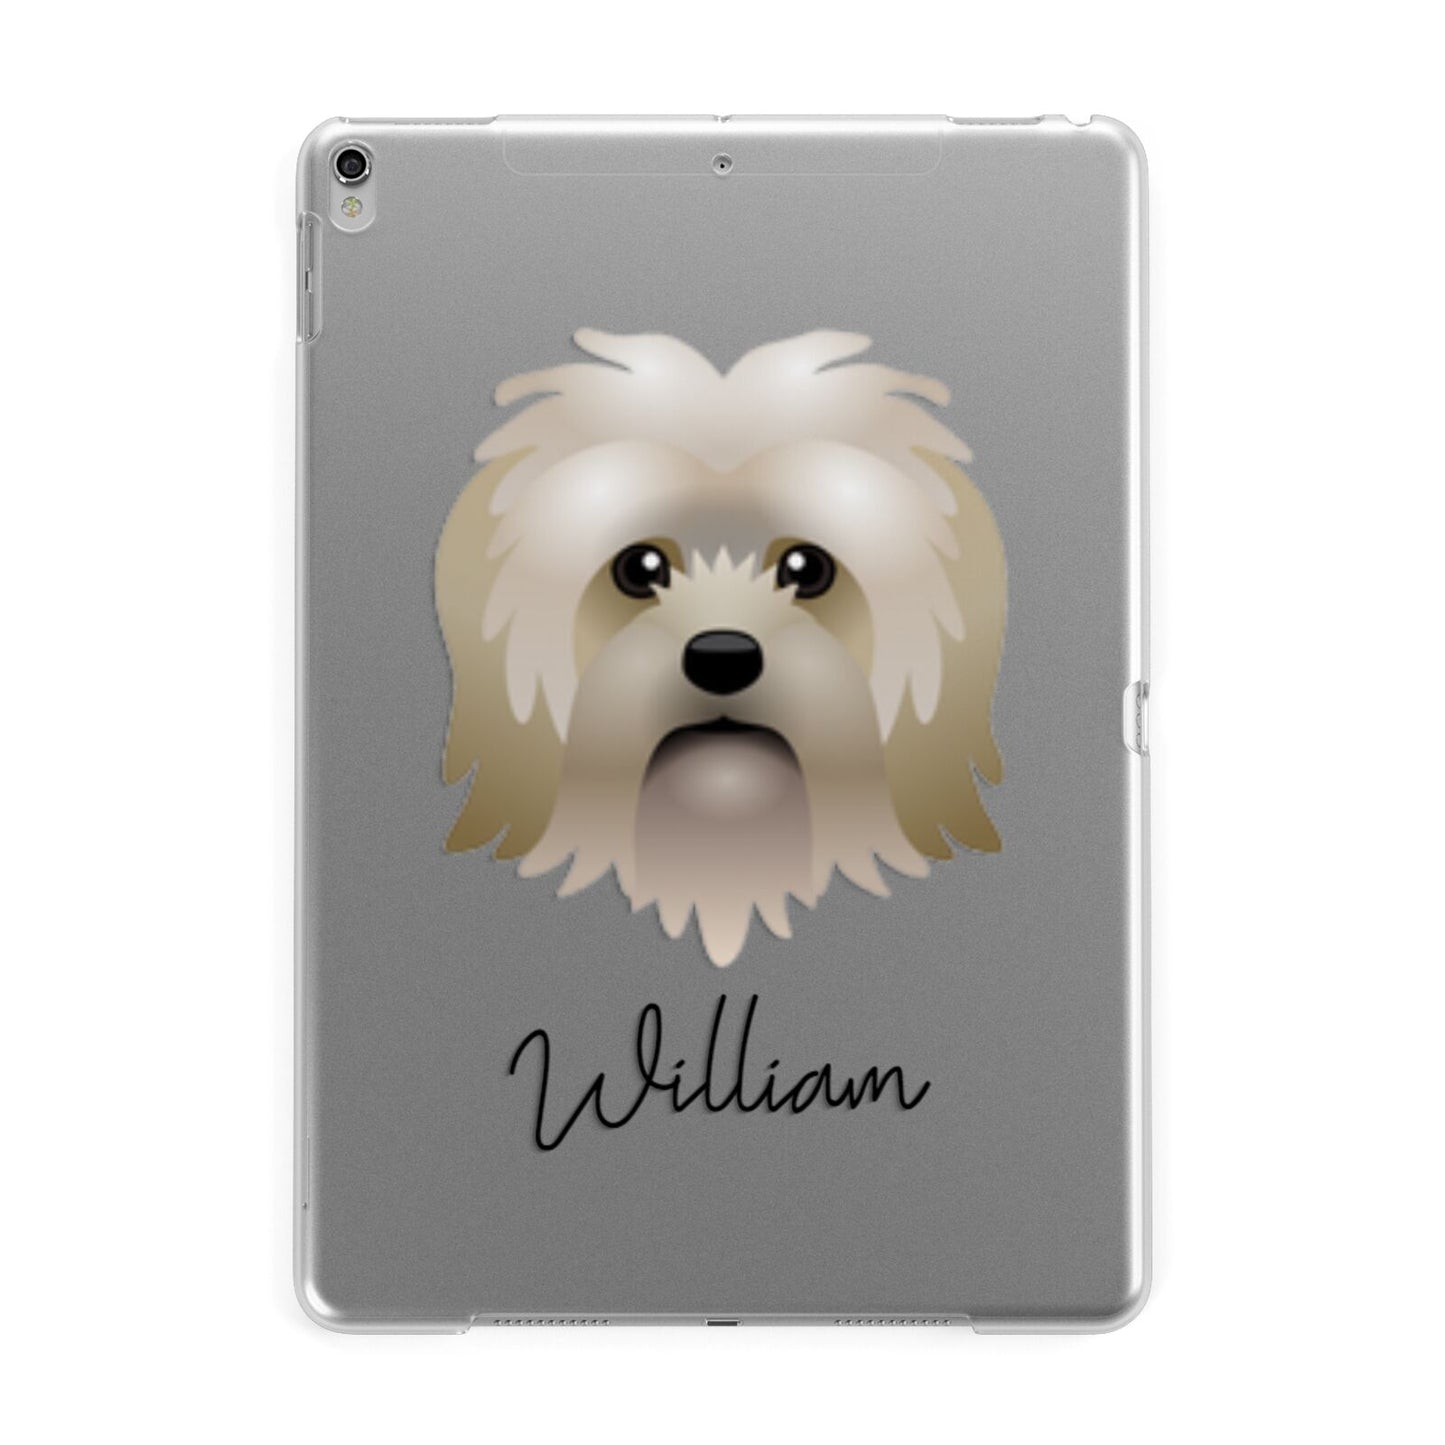 Lo wchen Personalised Apple iPad Silver Case